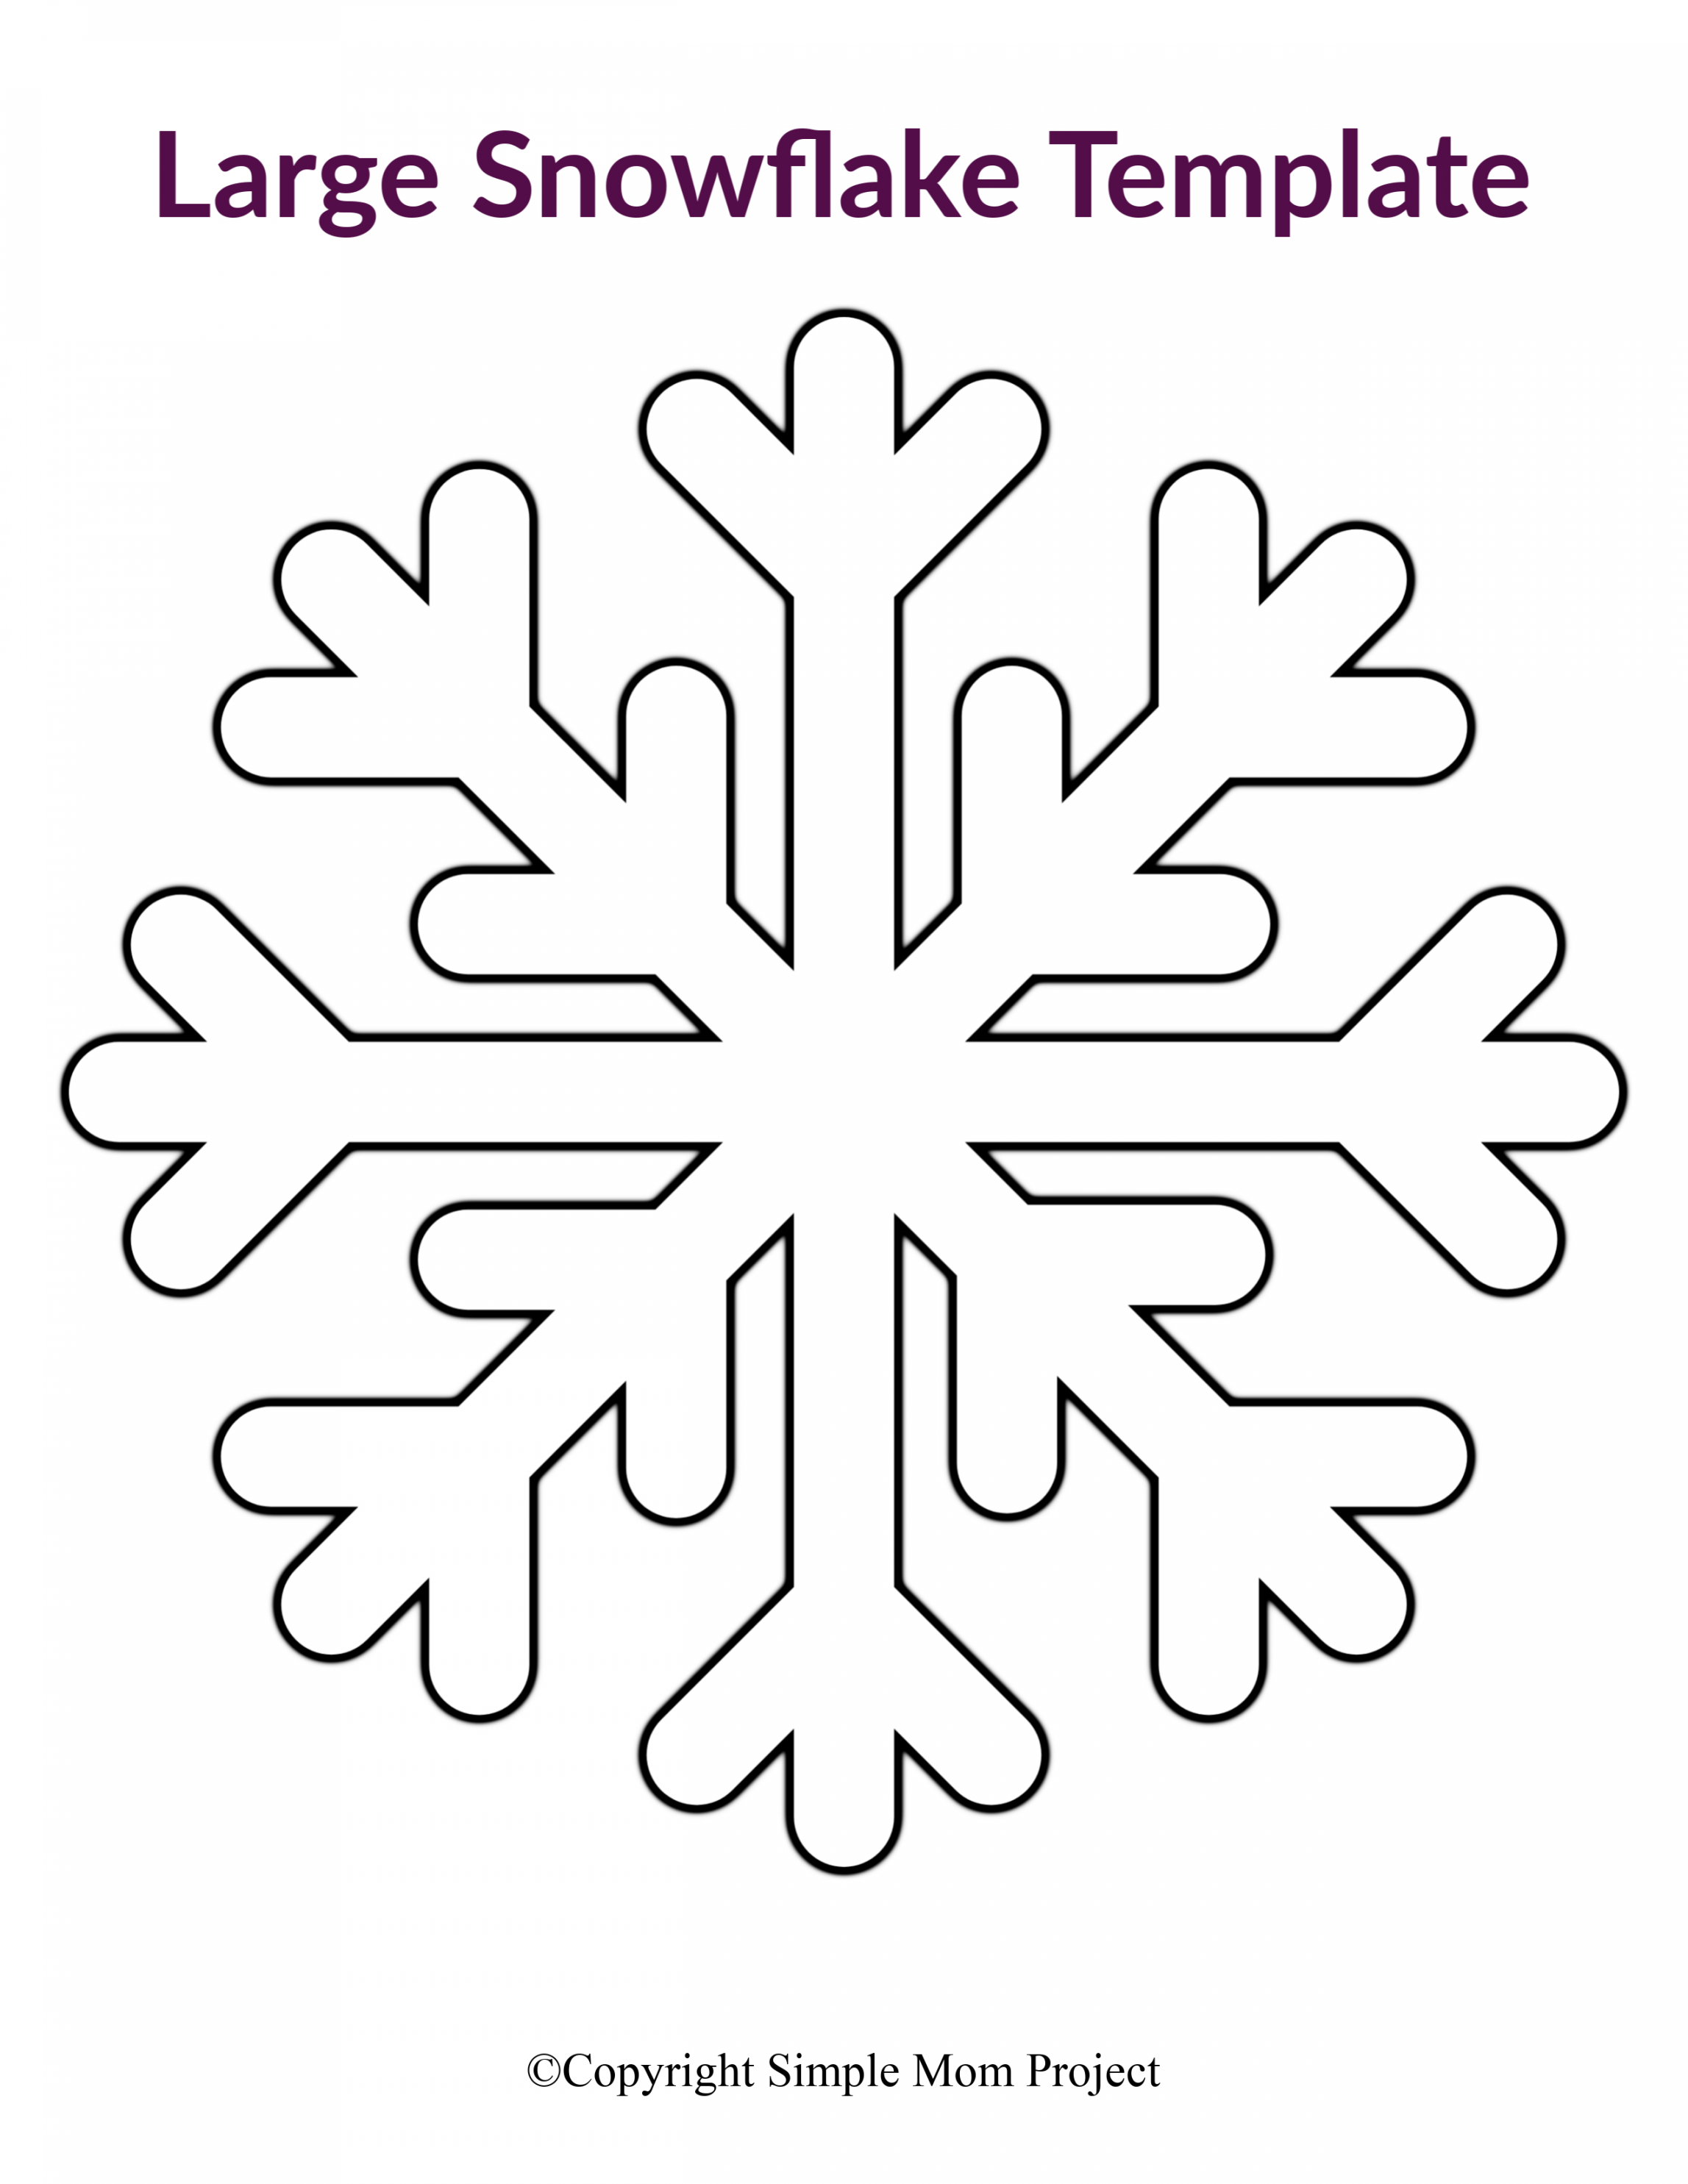 Free Printable Large Snowflake Templates - Simple Mom Project - FREE Printables - Free Printable Snowflake